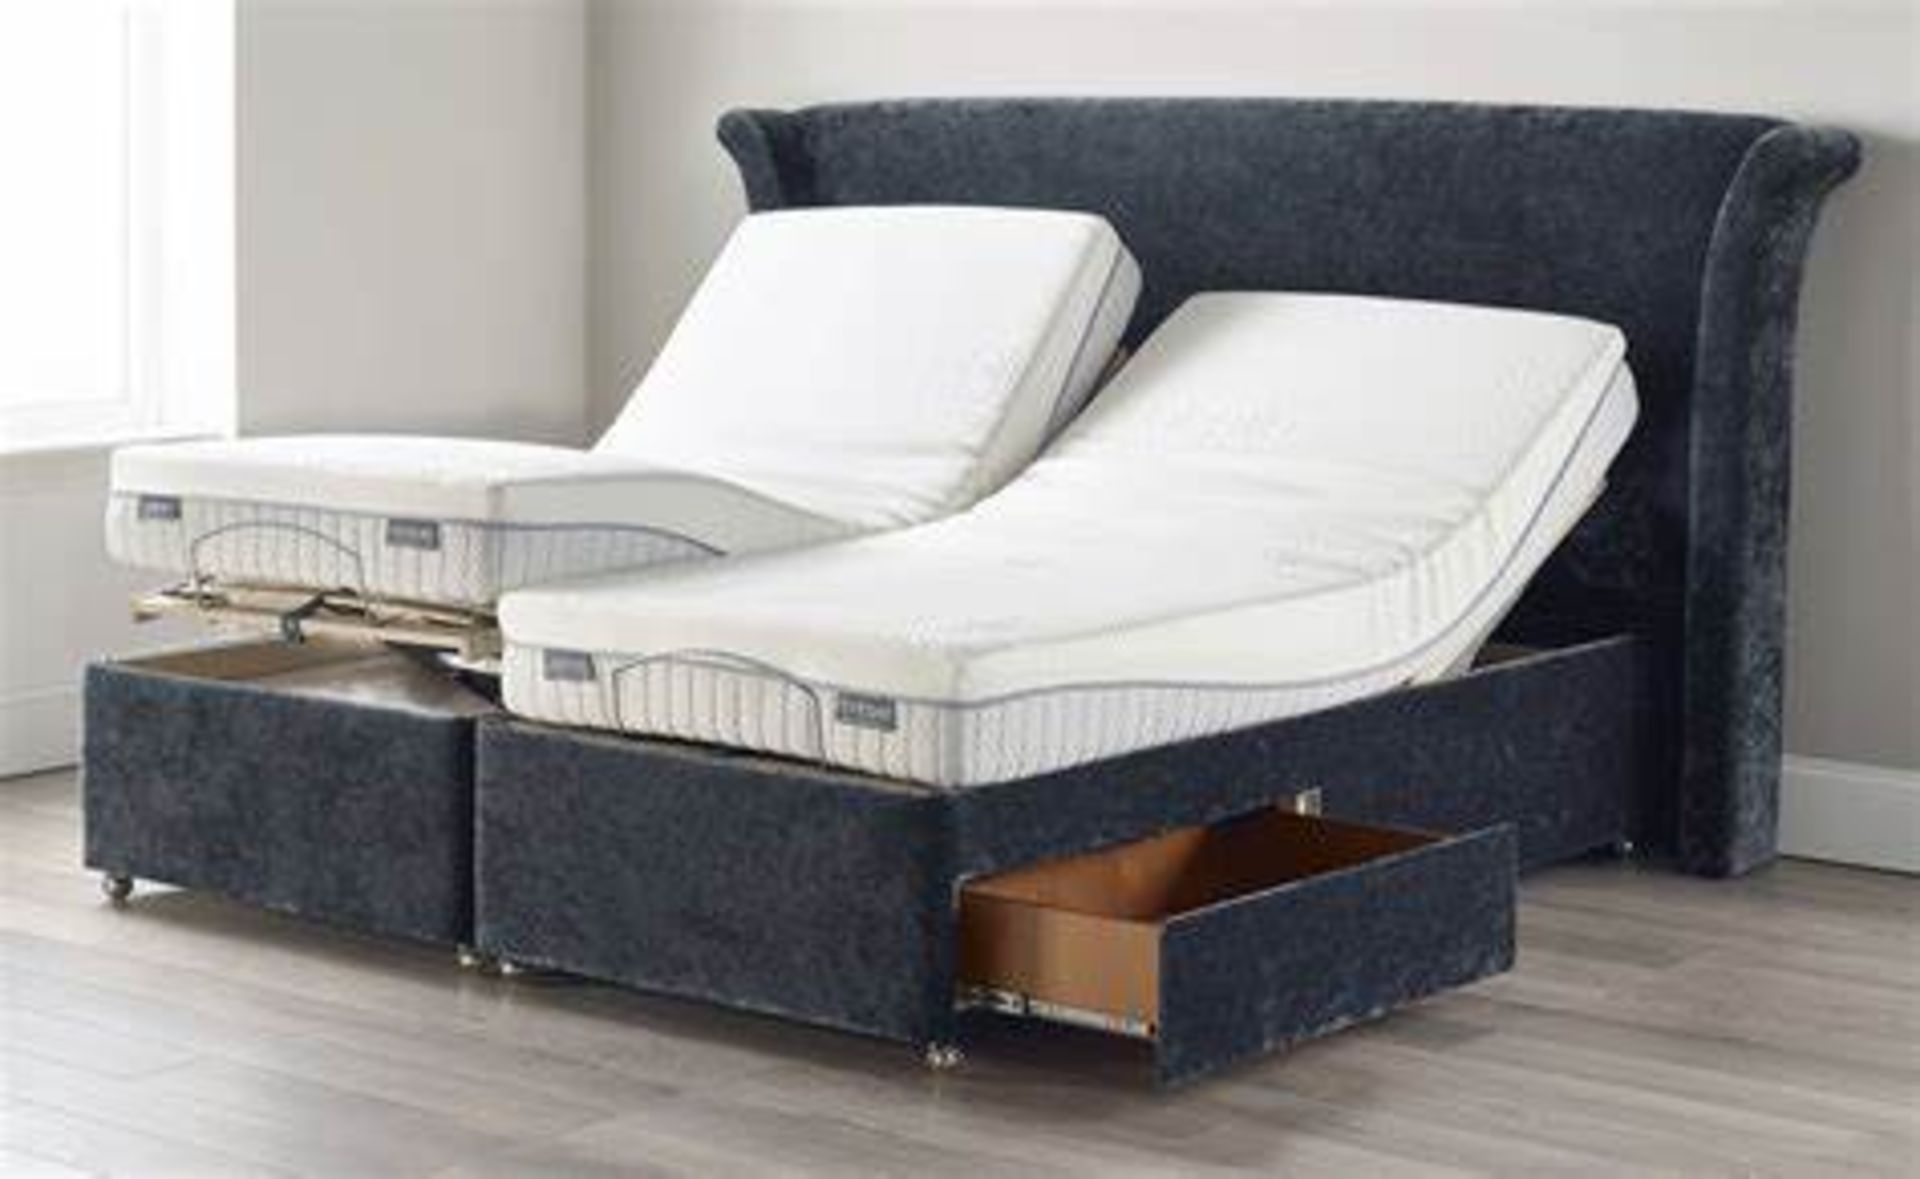 Adjusta 2 Drawer Divan 90x200cm Deep Base RH Berwick Marsala Our Collection Of Adjustable Beds And